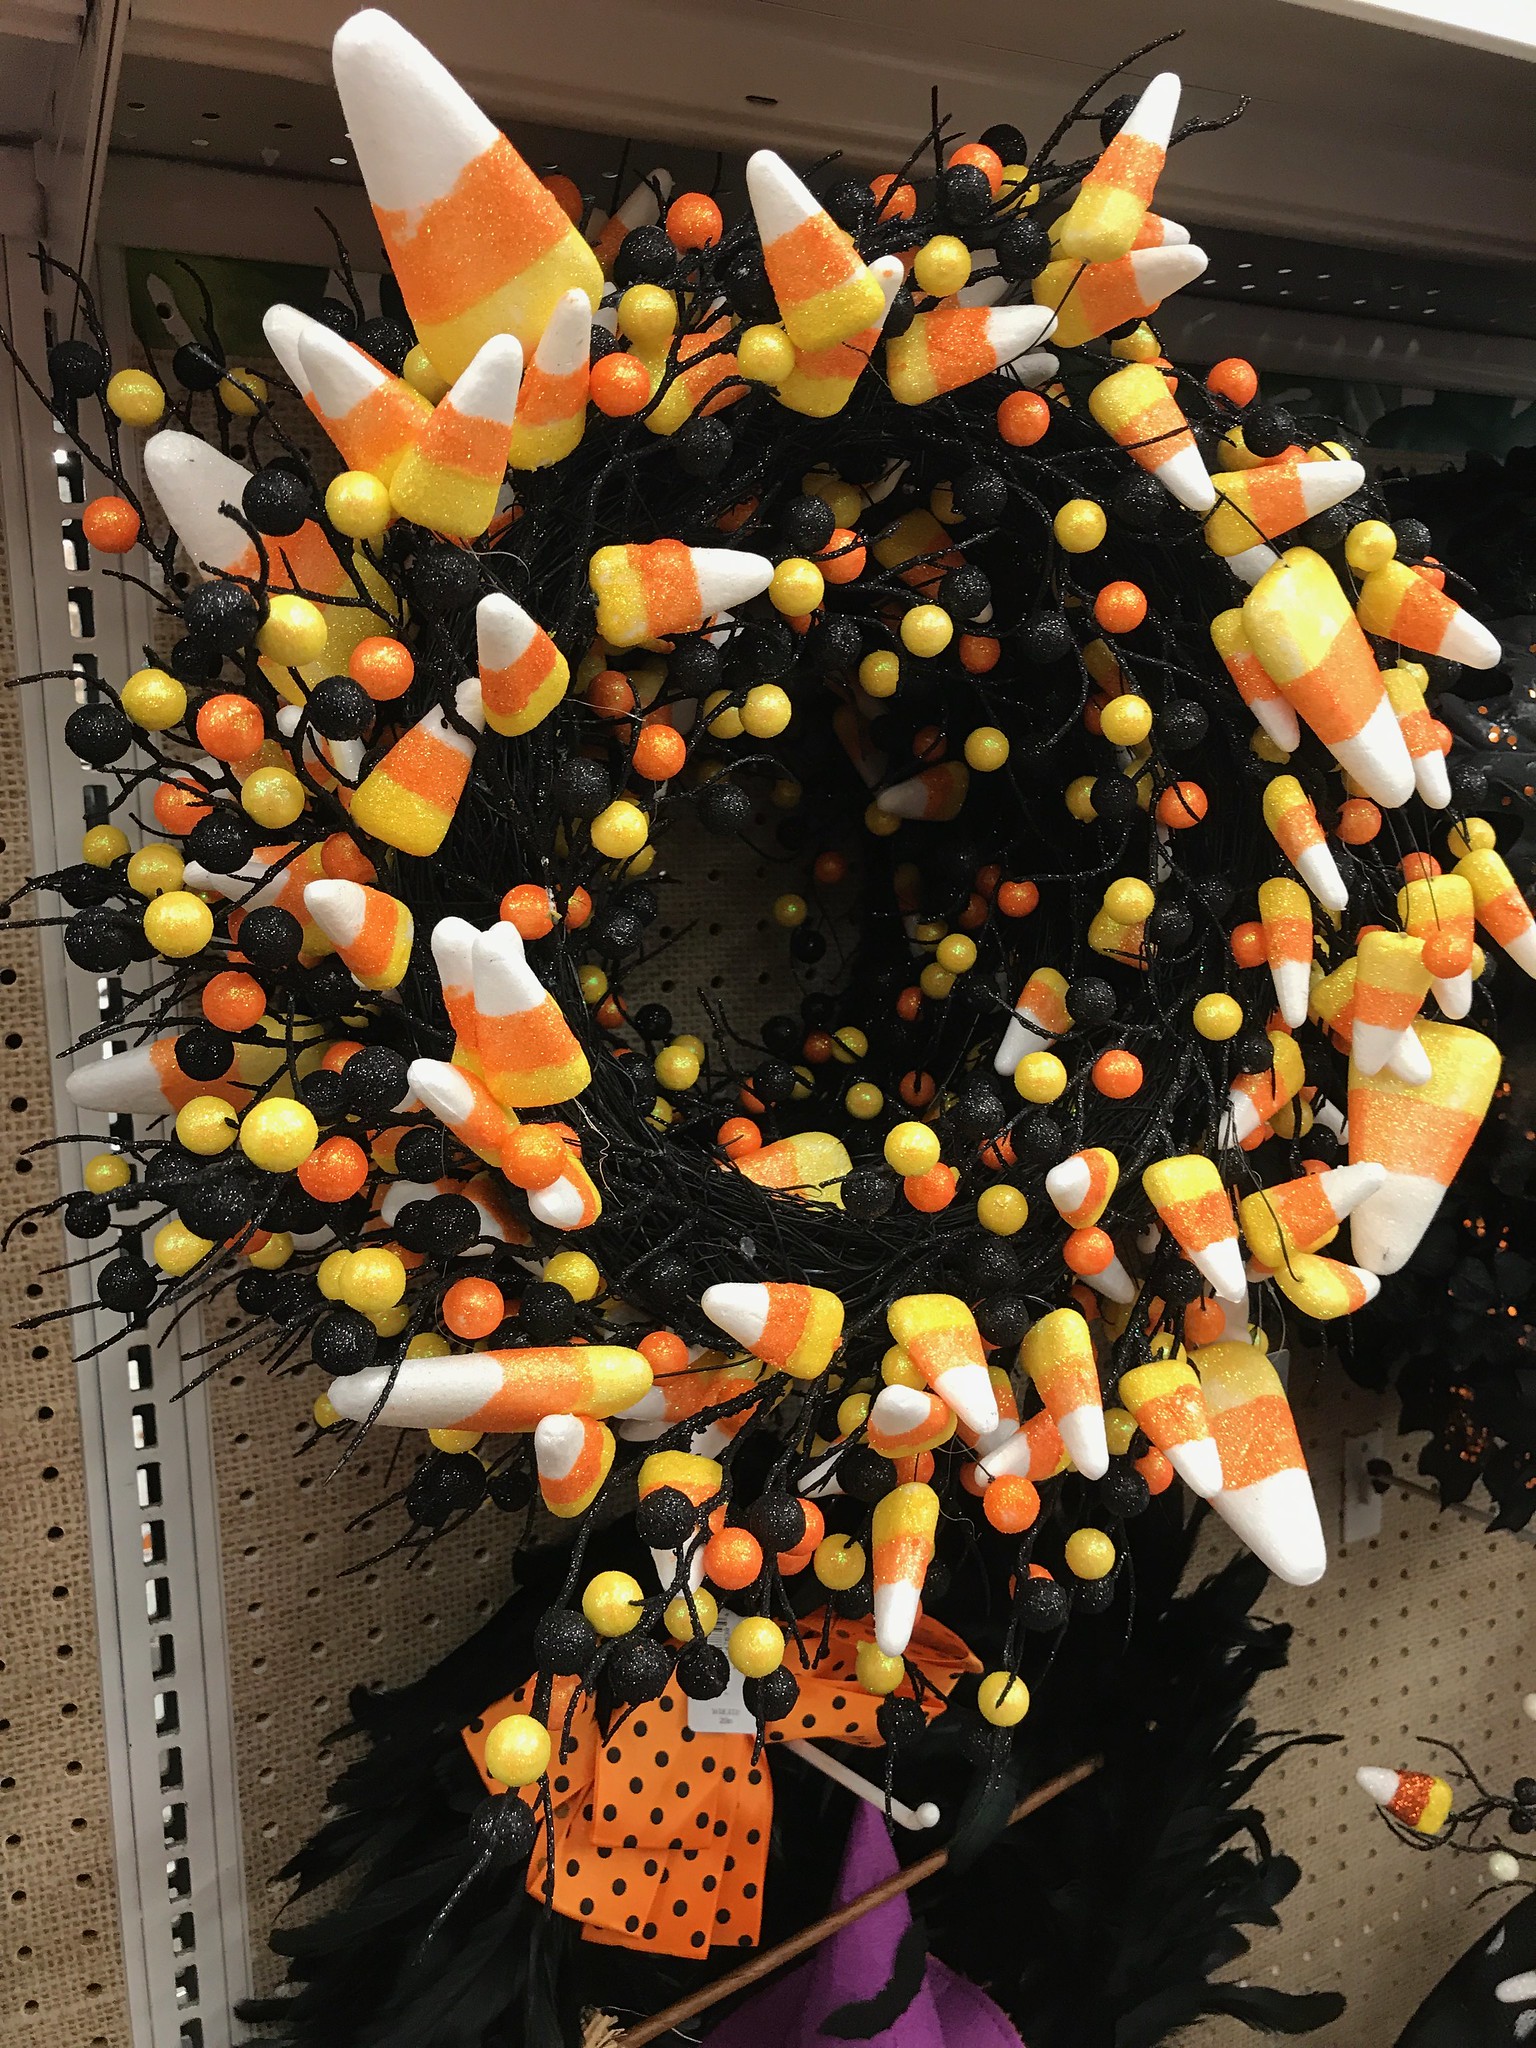 Candy Corn Wreath